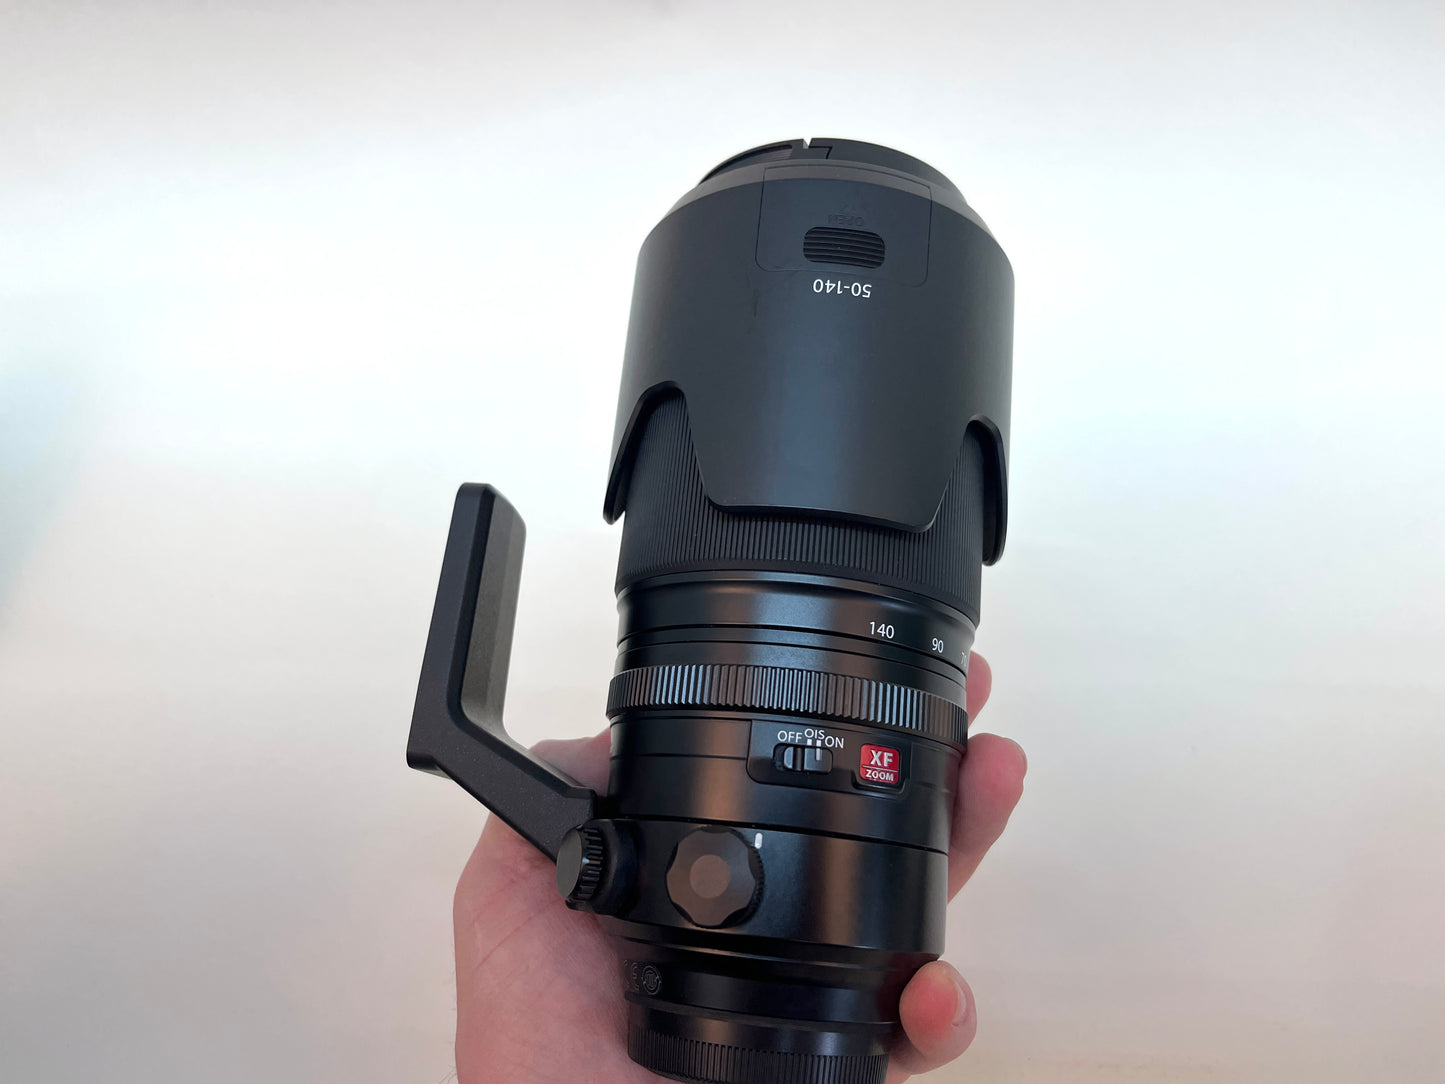 Fujinon Fujifilm XF 50-140mm f/2.8 R LM OIS Lens Boxed Near Mint